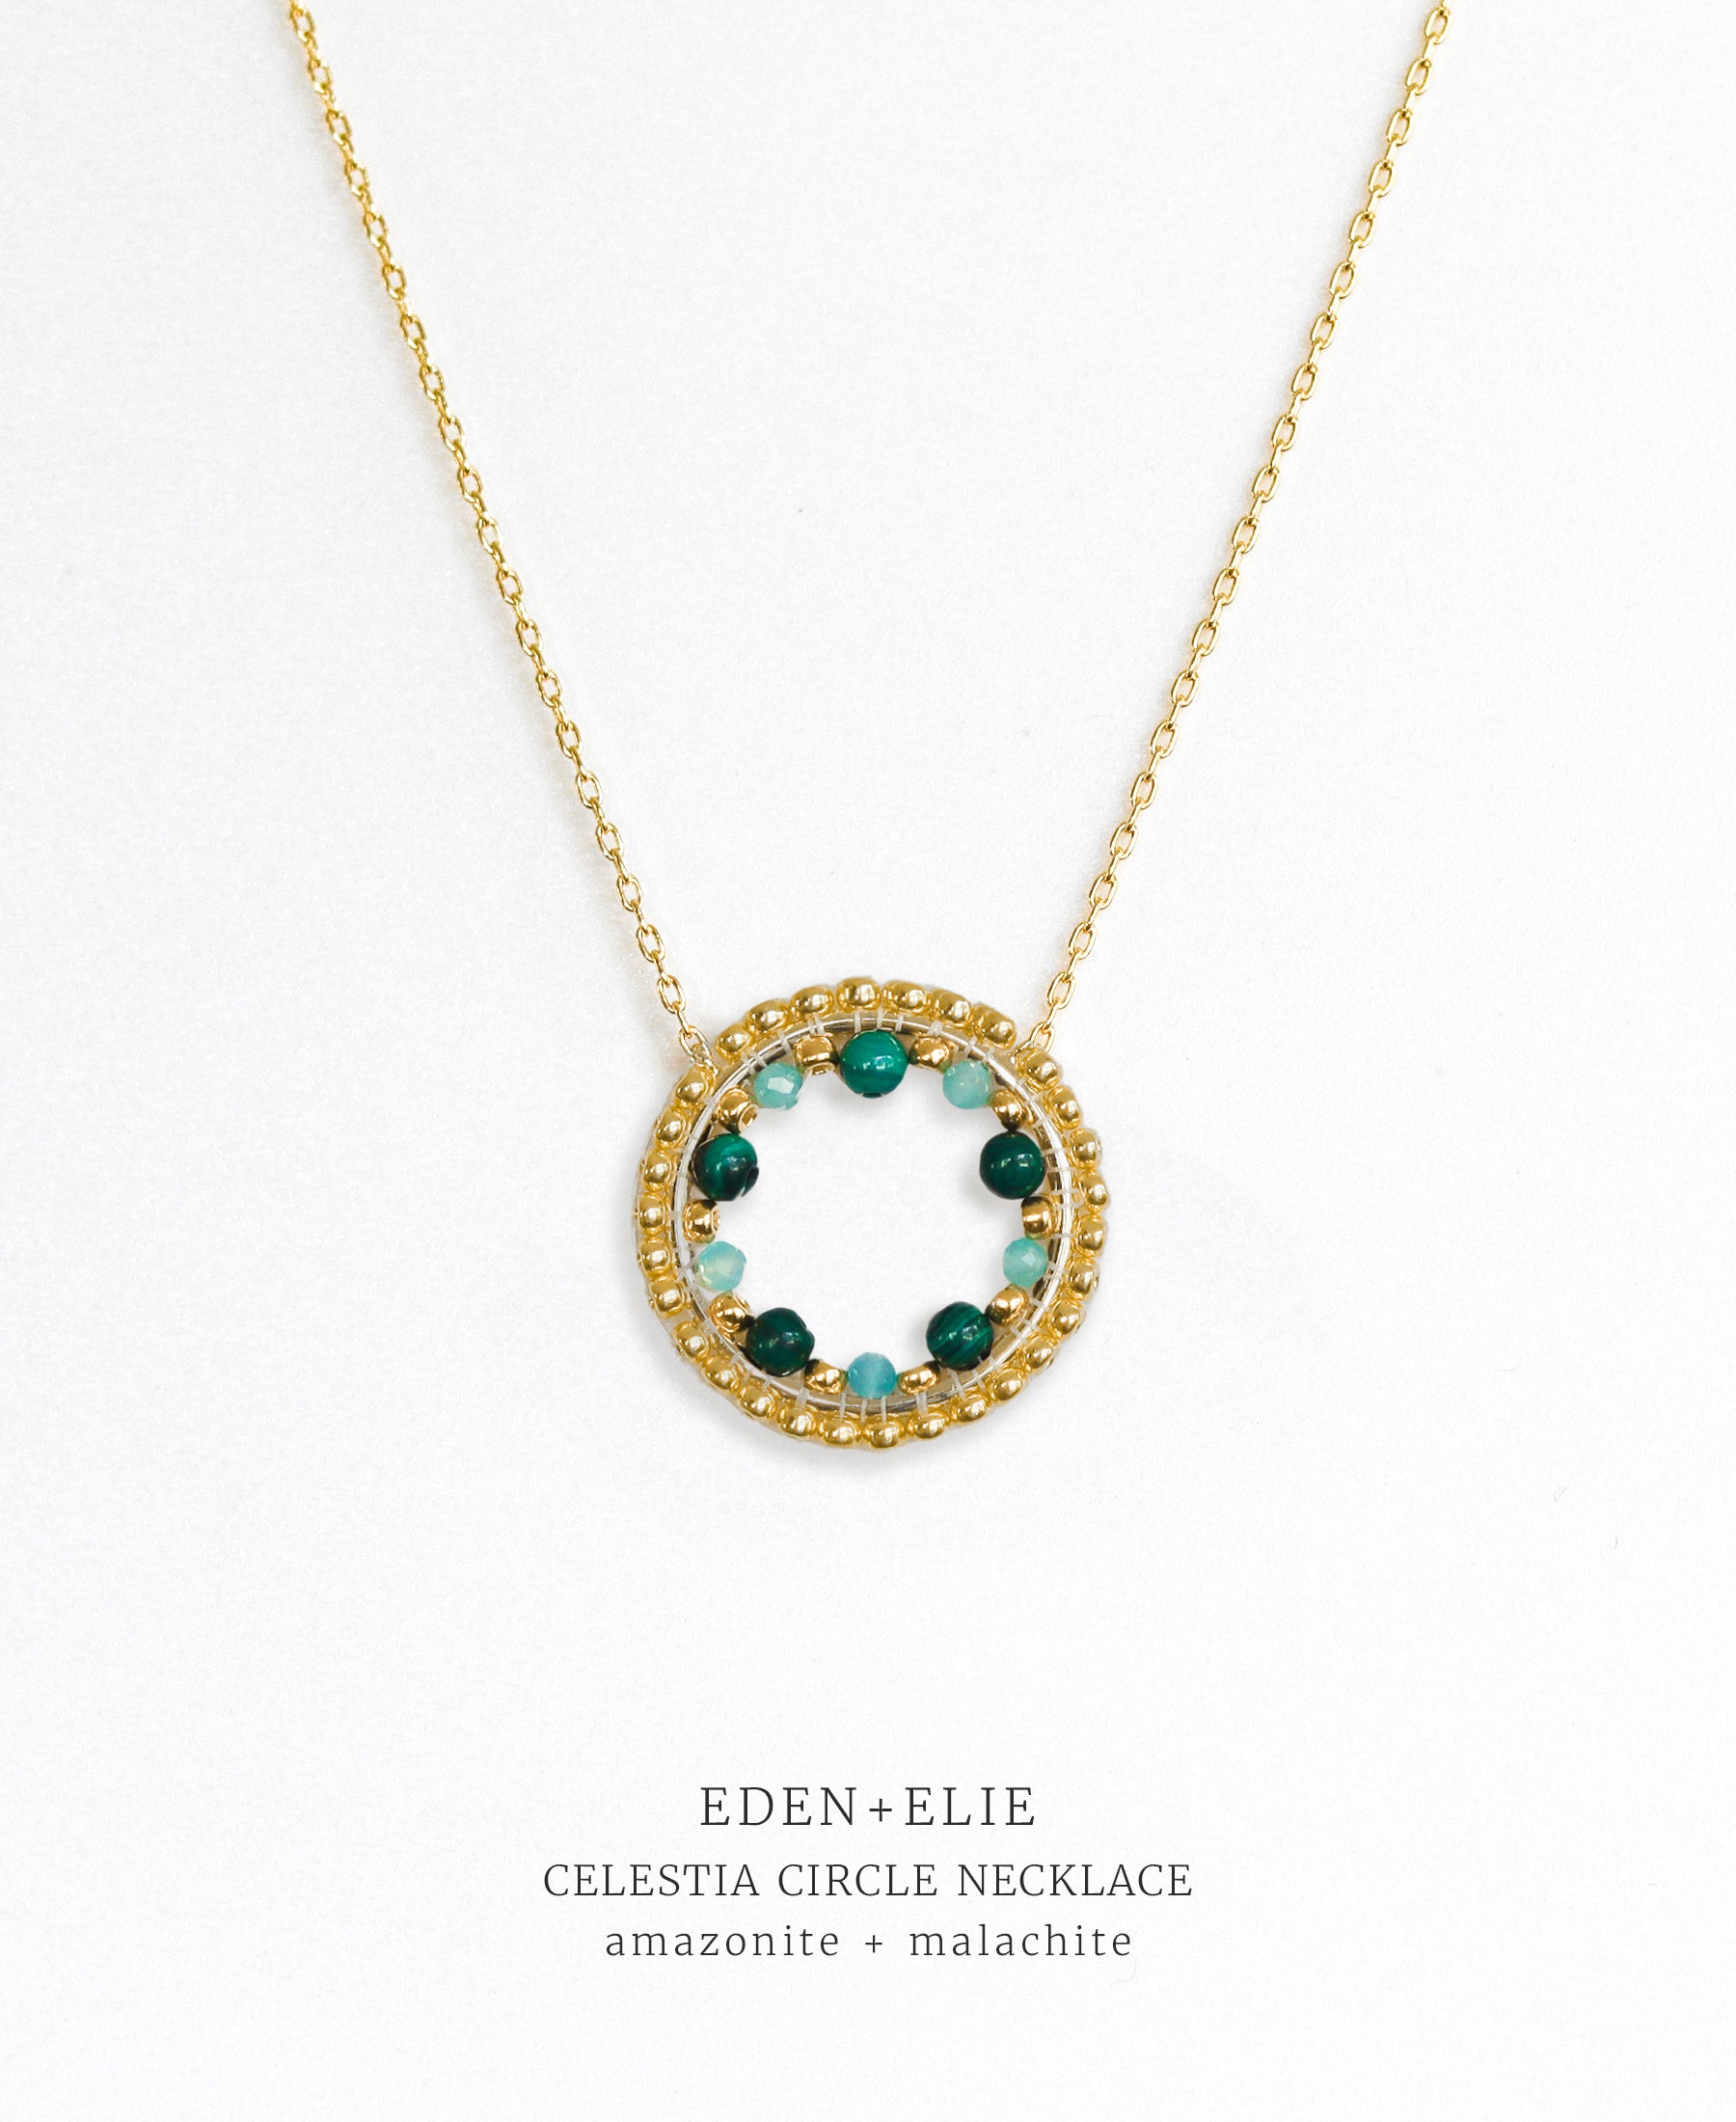 EDEN + ELIE Celestia Circle Necklace - Amazonite + Malachite